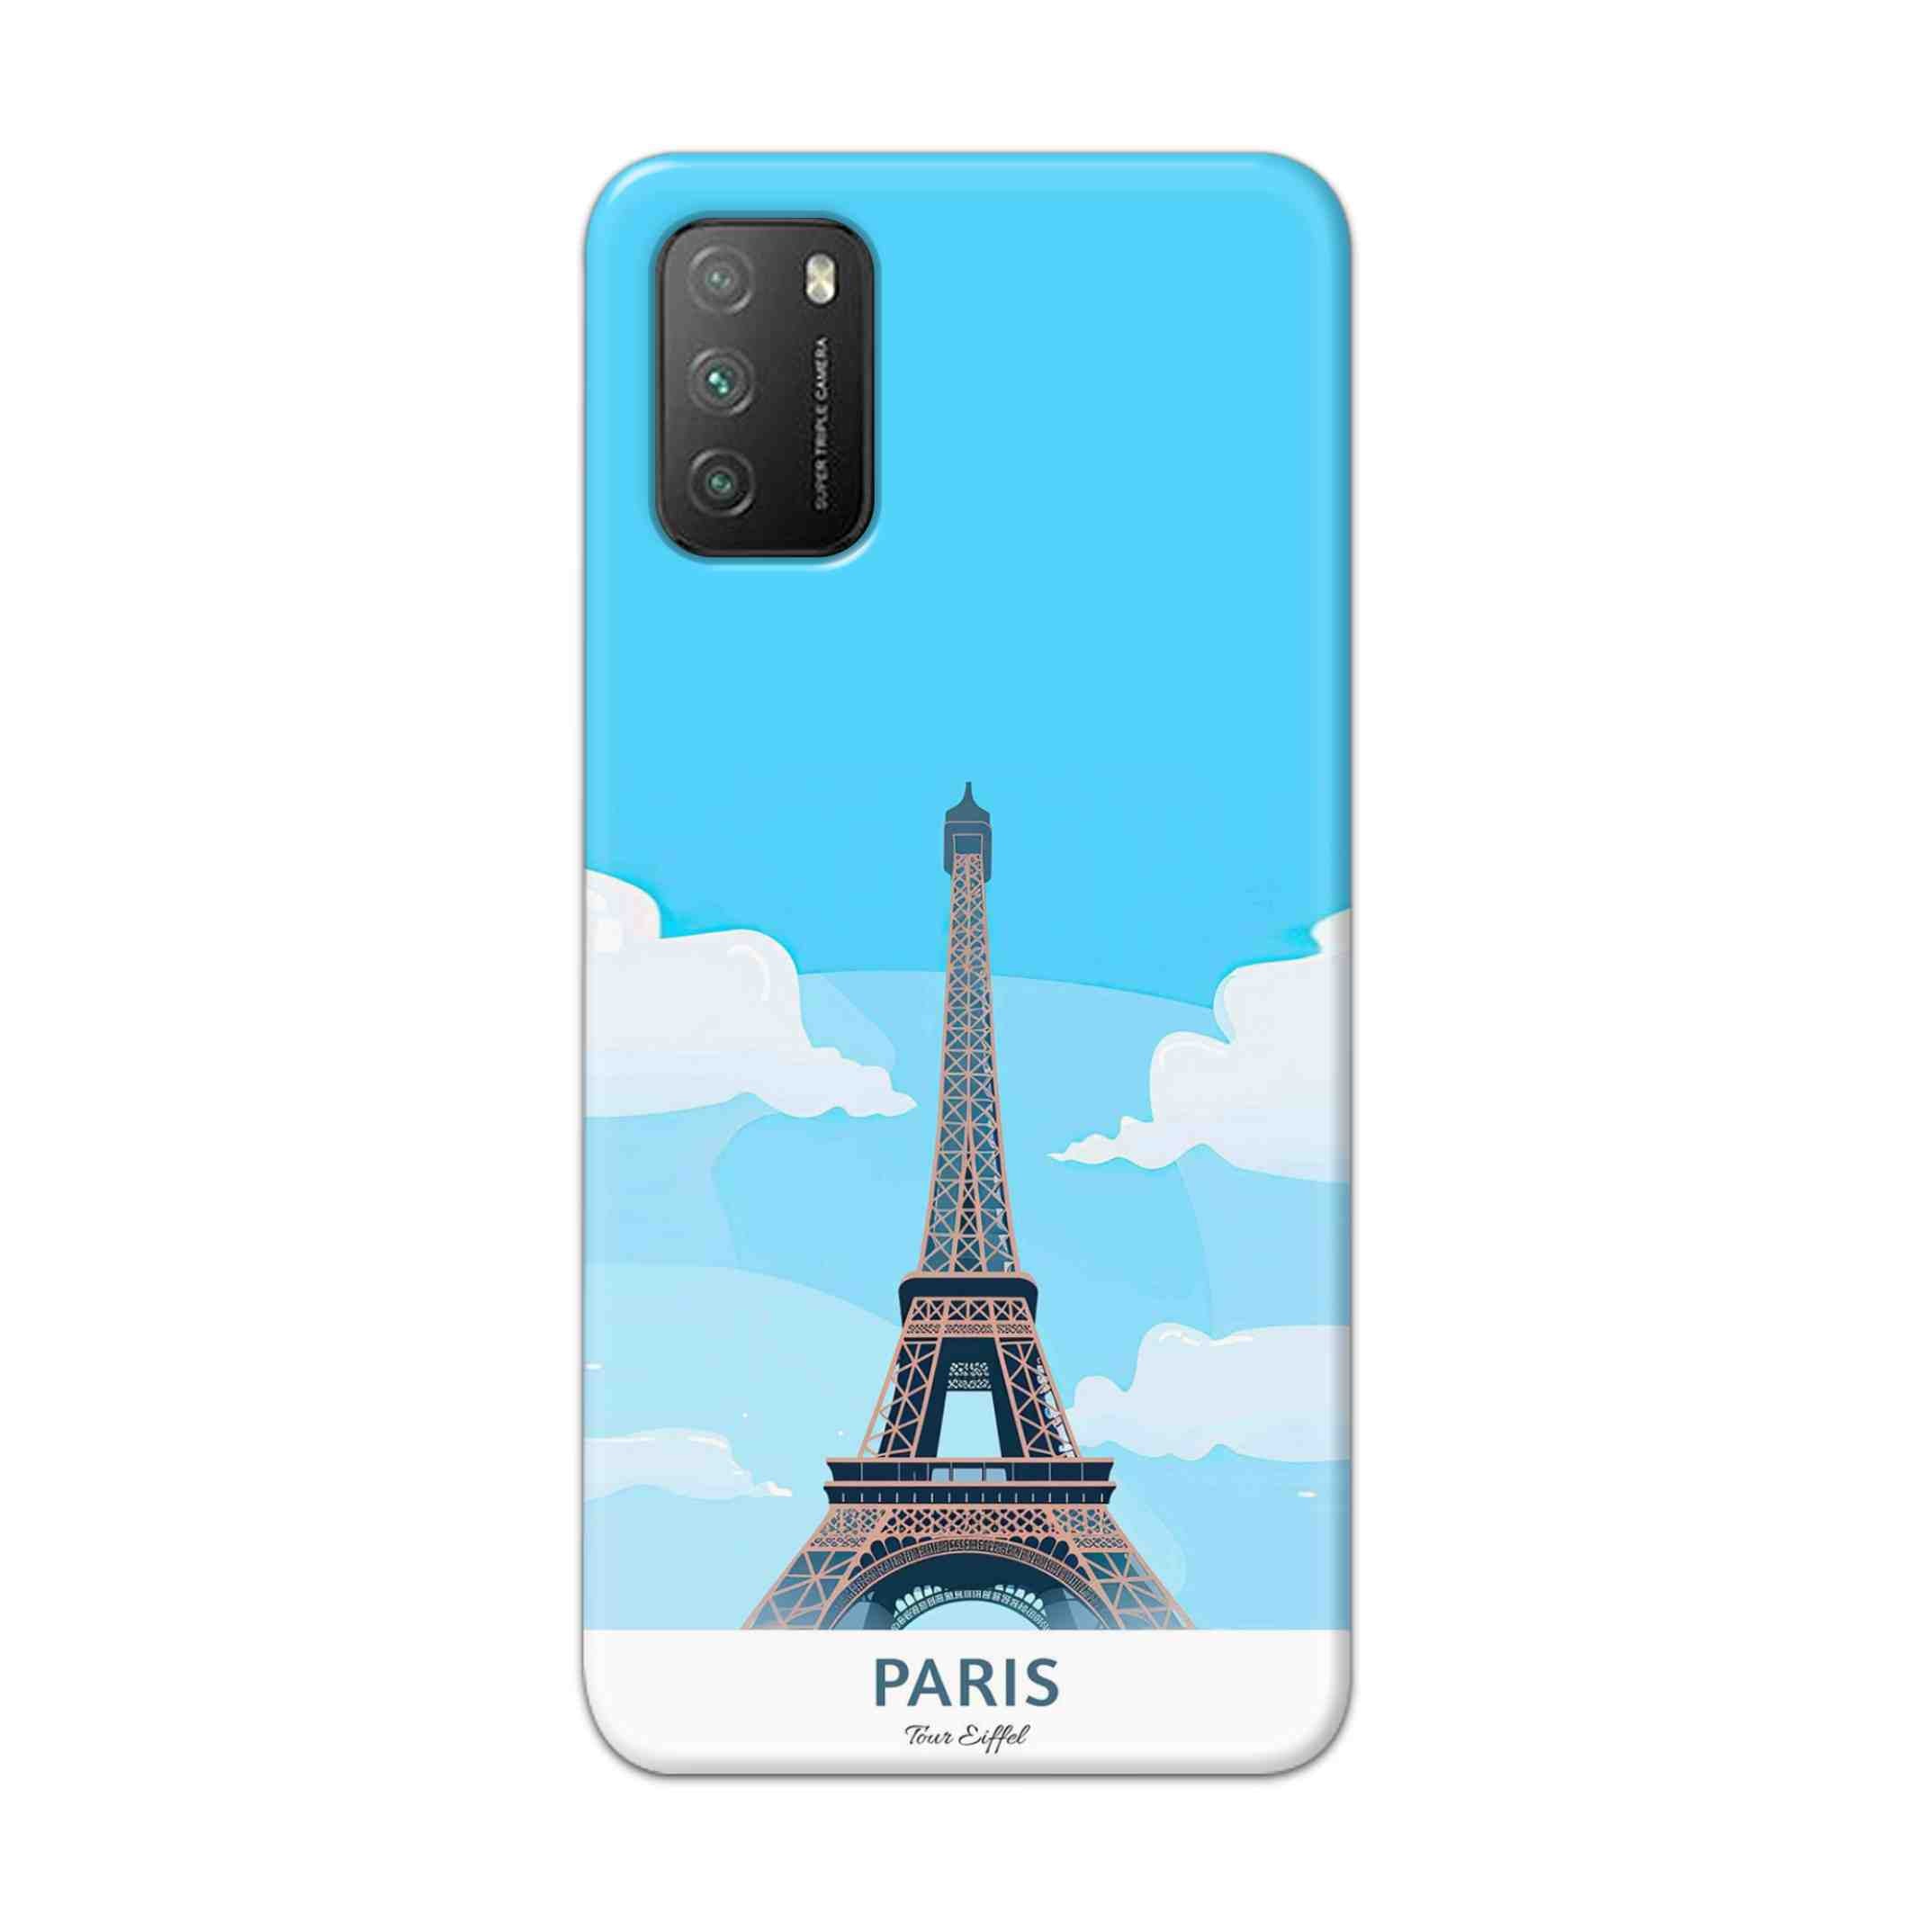 Buy Paris Hard Back Mobile Phone Case Cover For Poco M3 Online